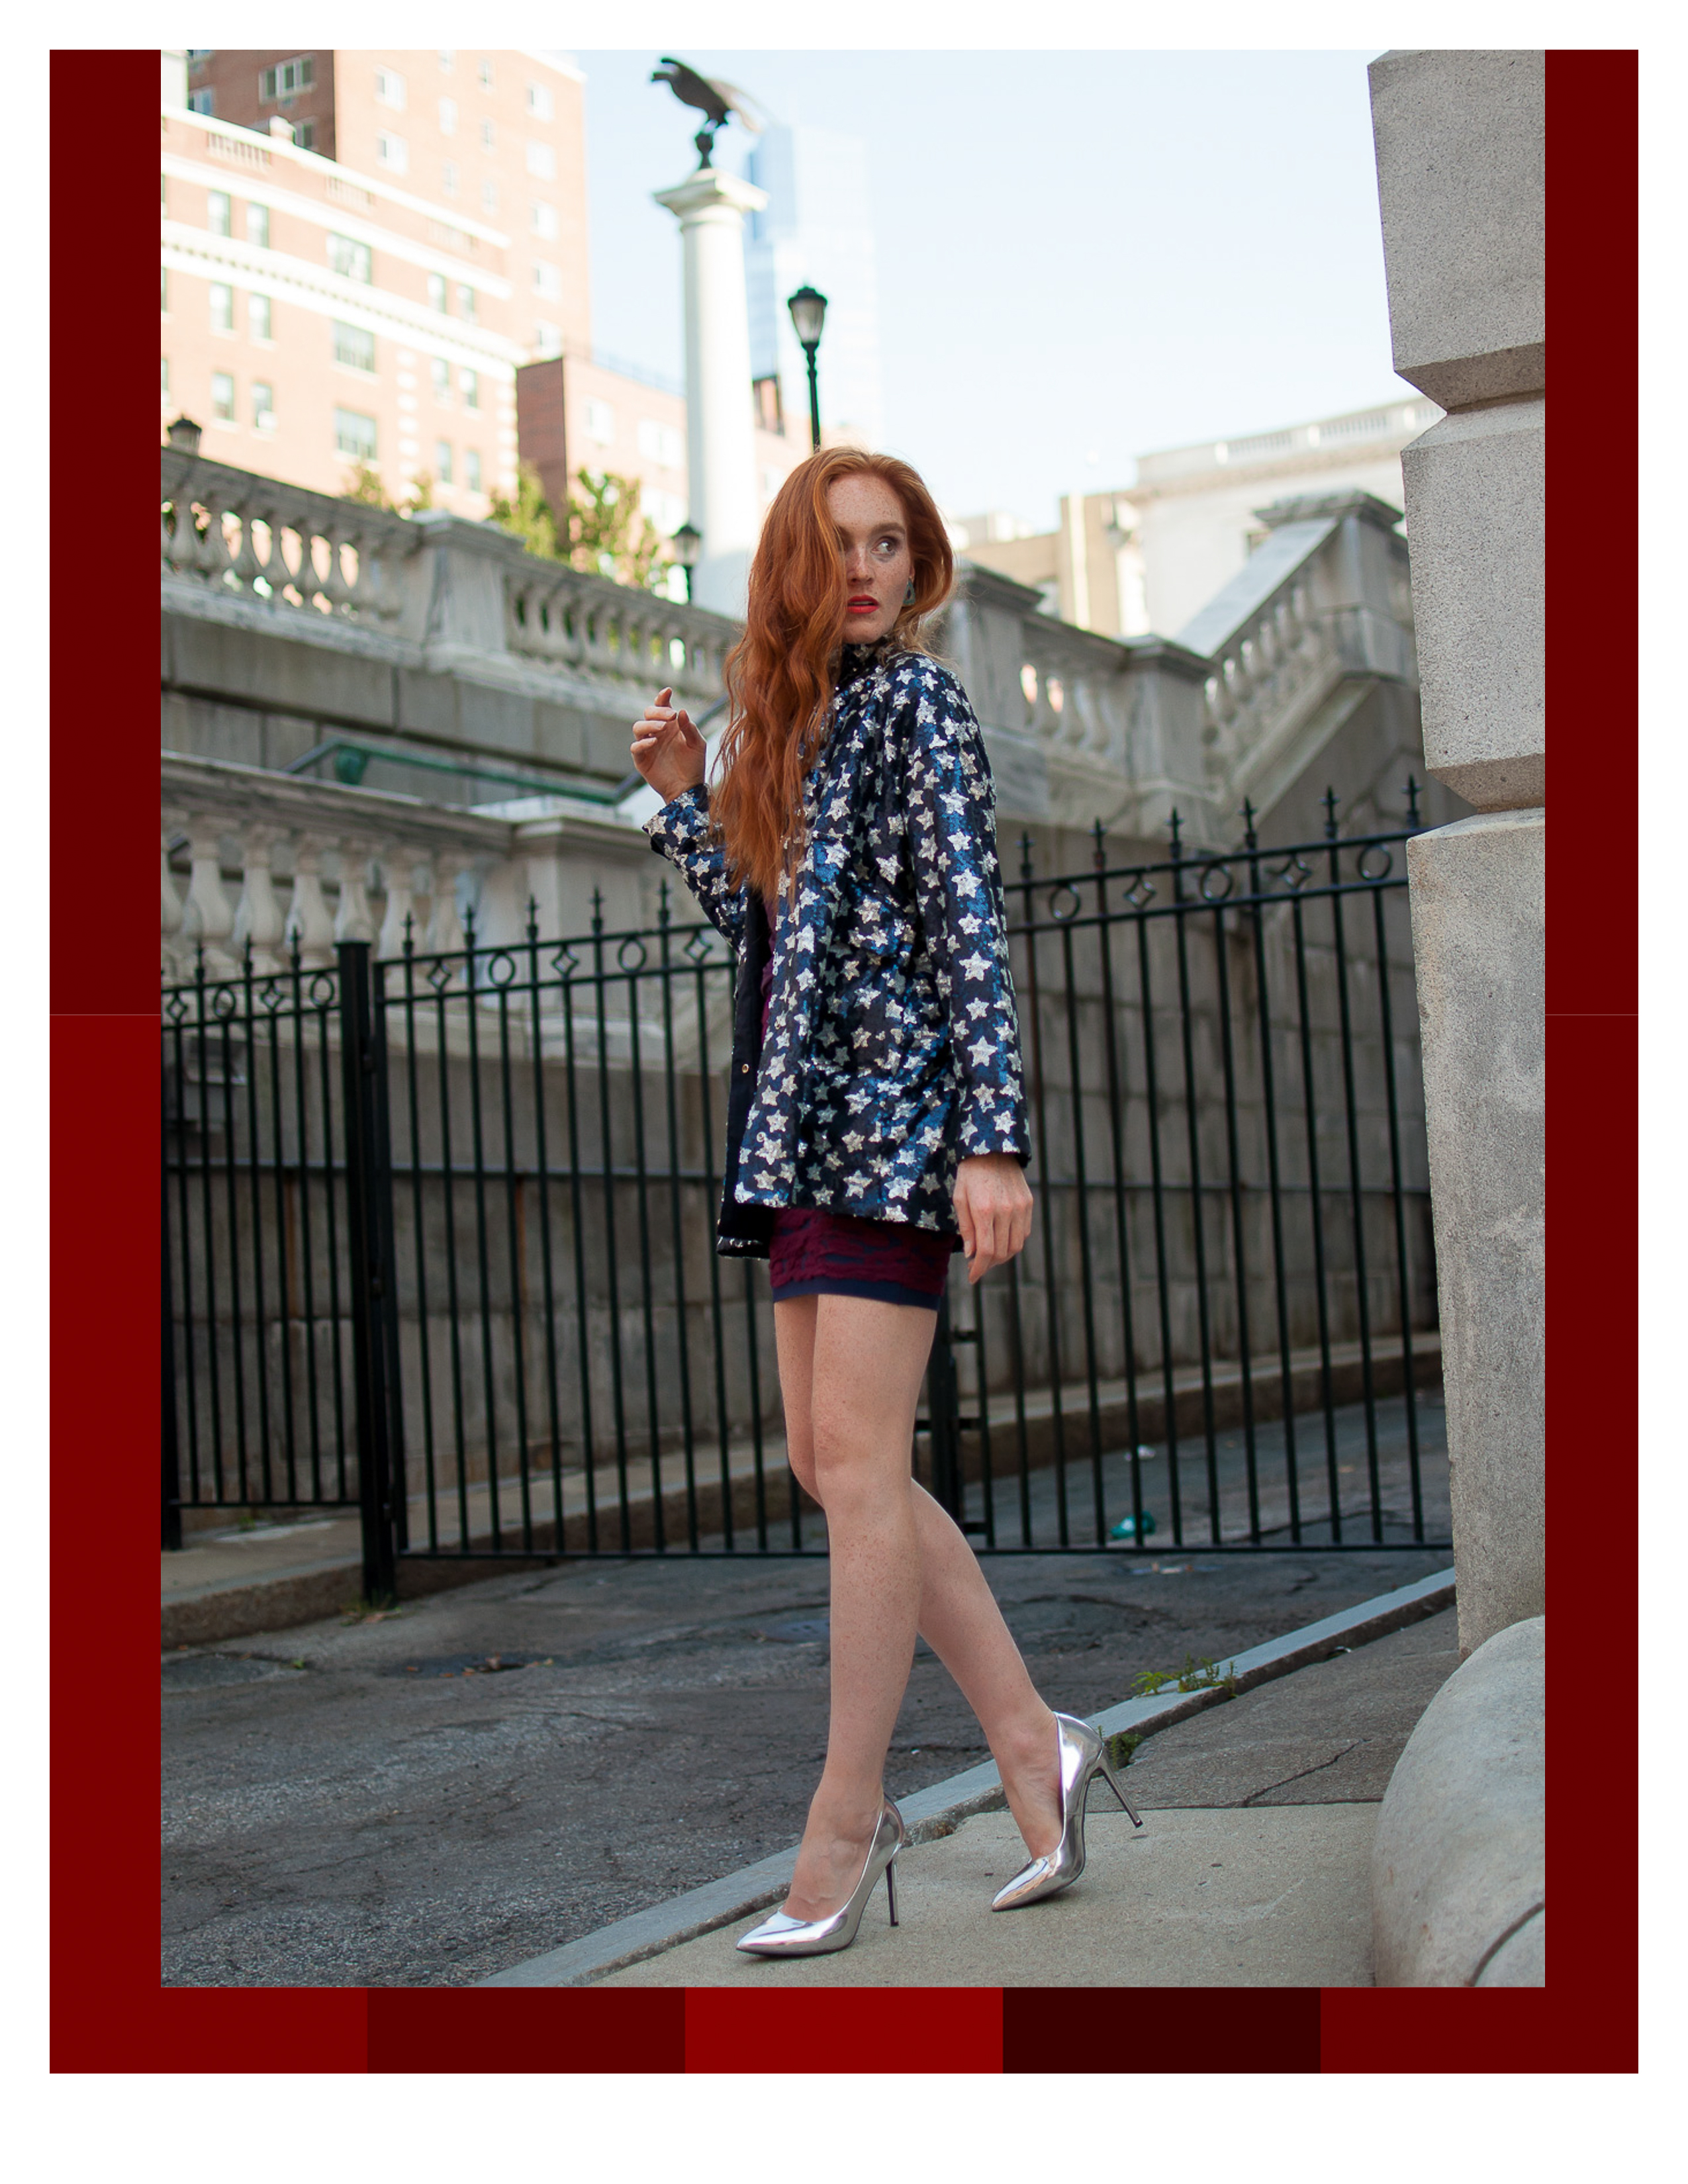 Zara stars coat and Manolo Blahnik stiletto heels at Boston State House